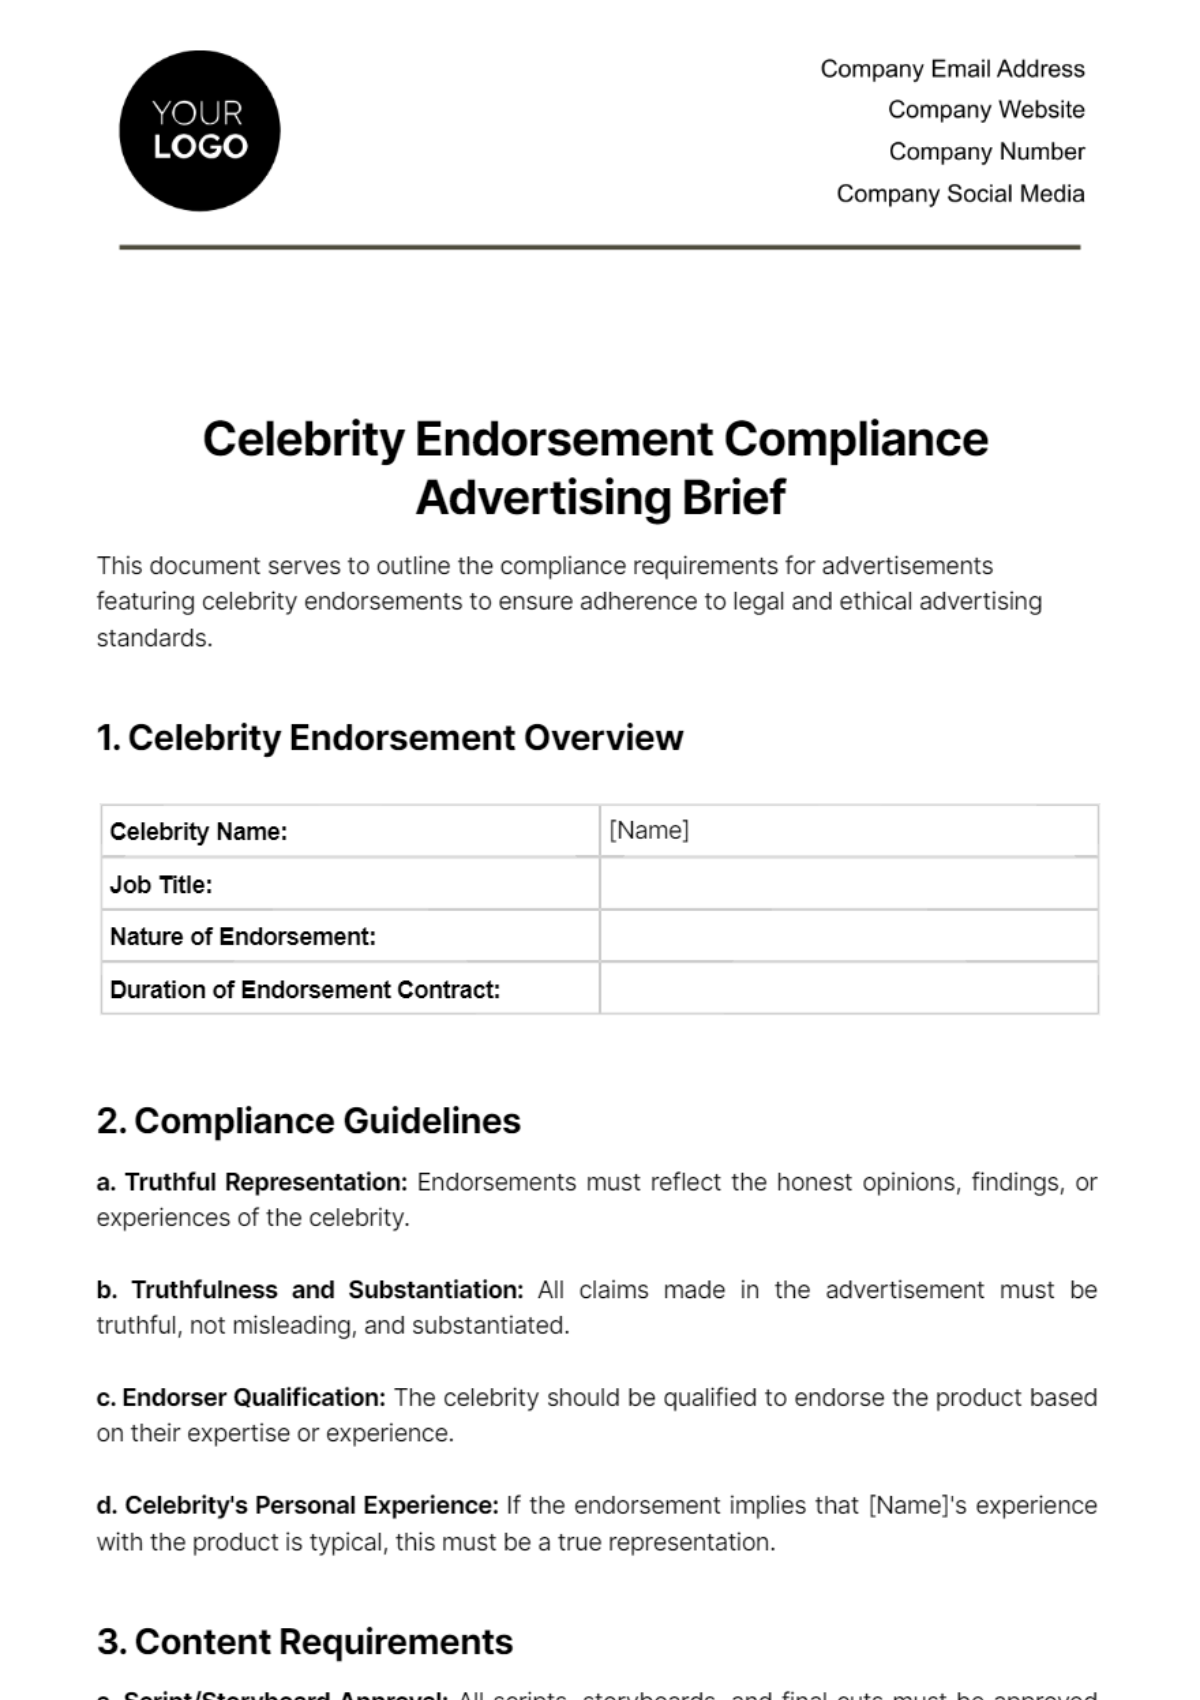 Celebrity Endorsement Compliance Advertising Brief Template